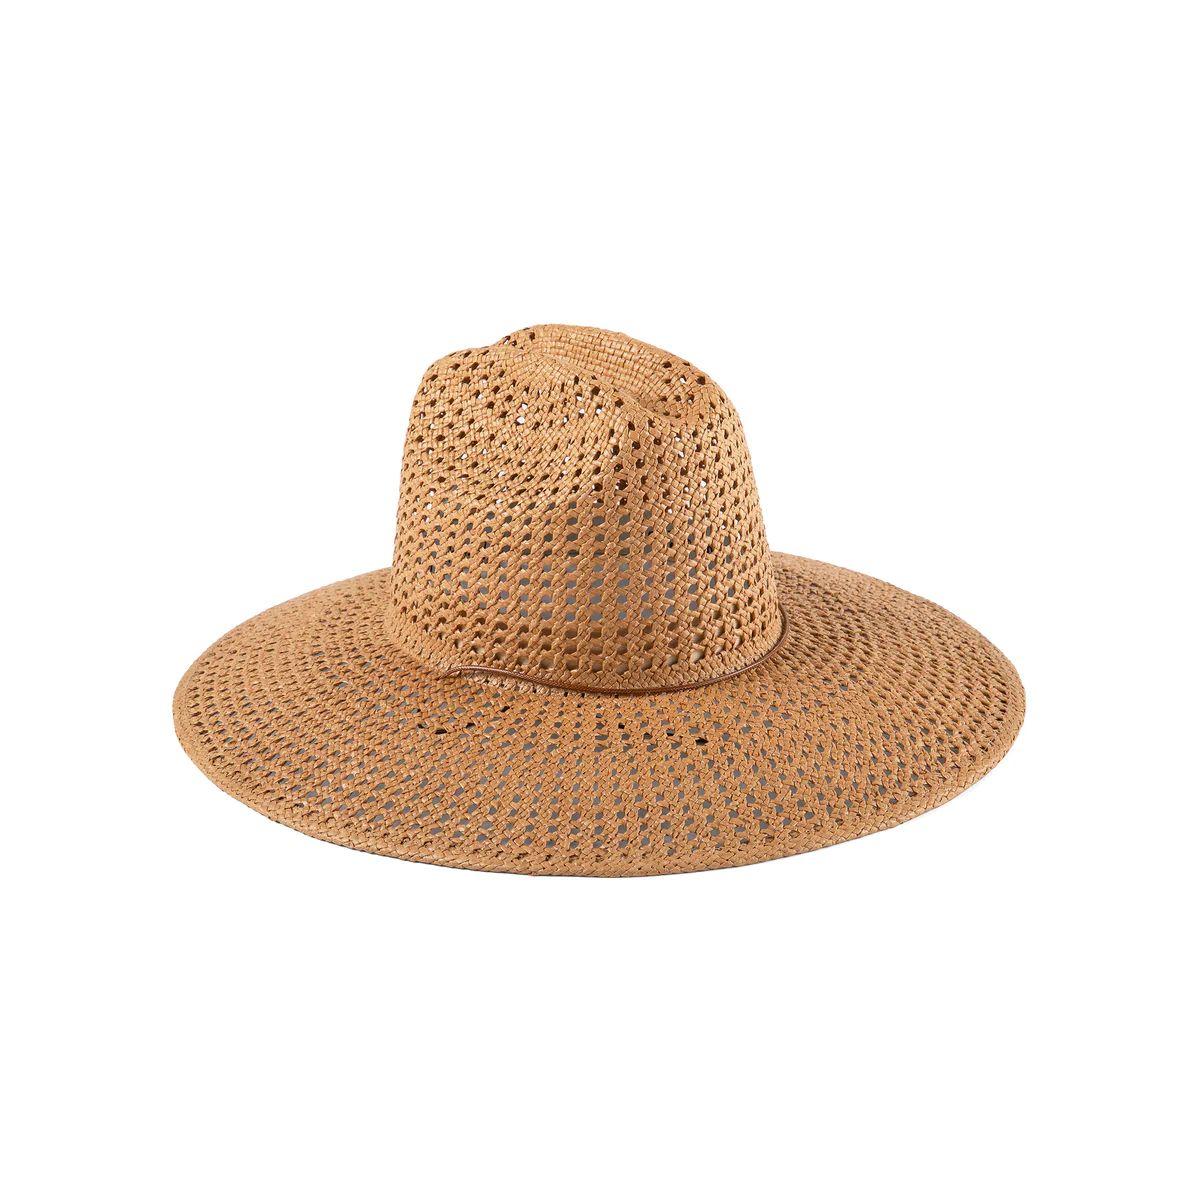 The Vista - Straw Cowboy Hat in Brown | Lack of Color US | Lack of Color